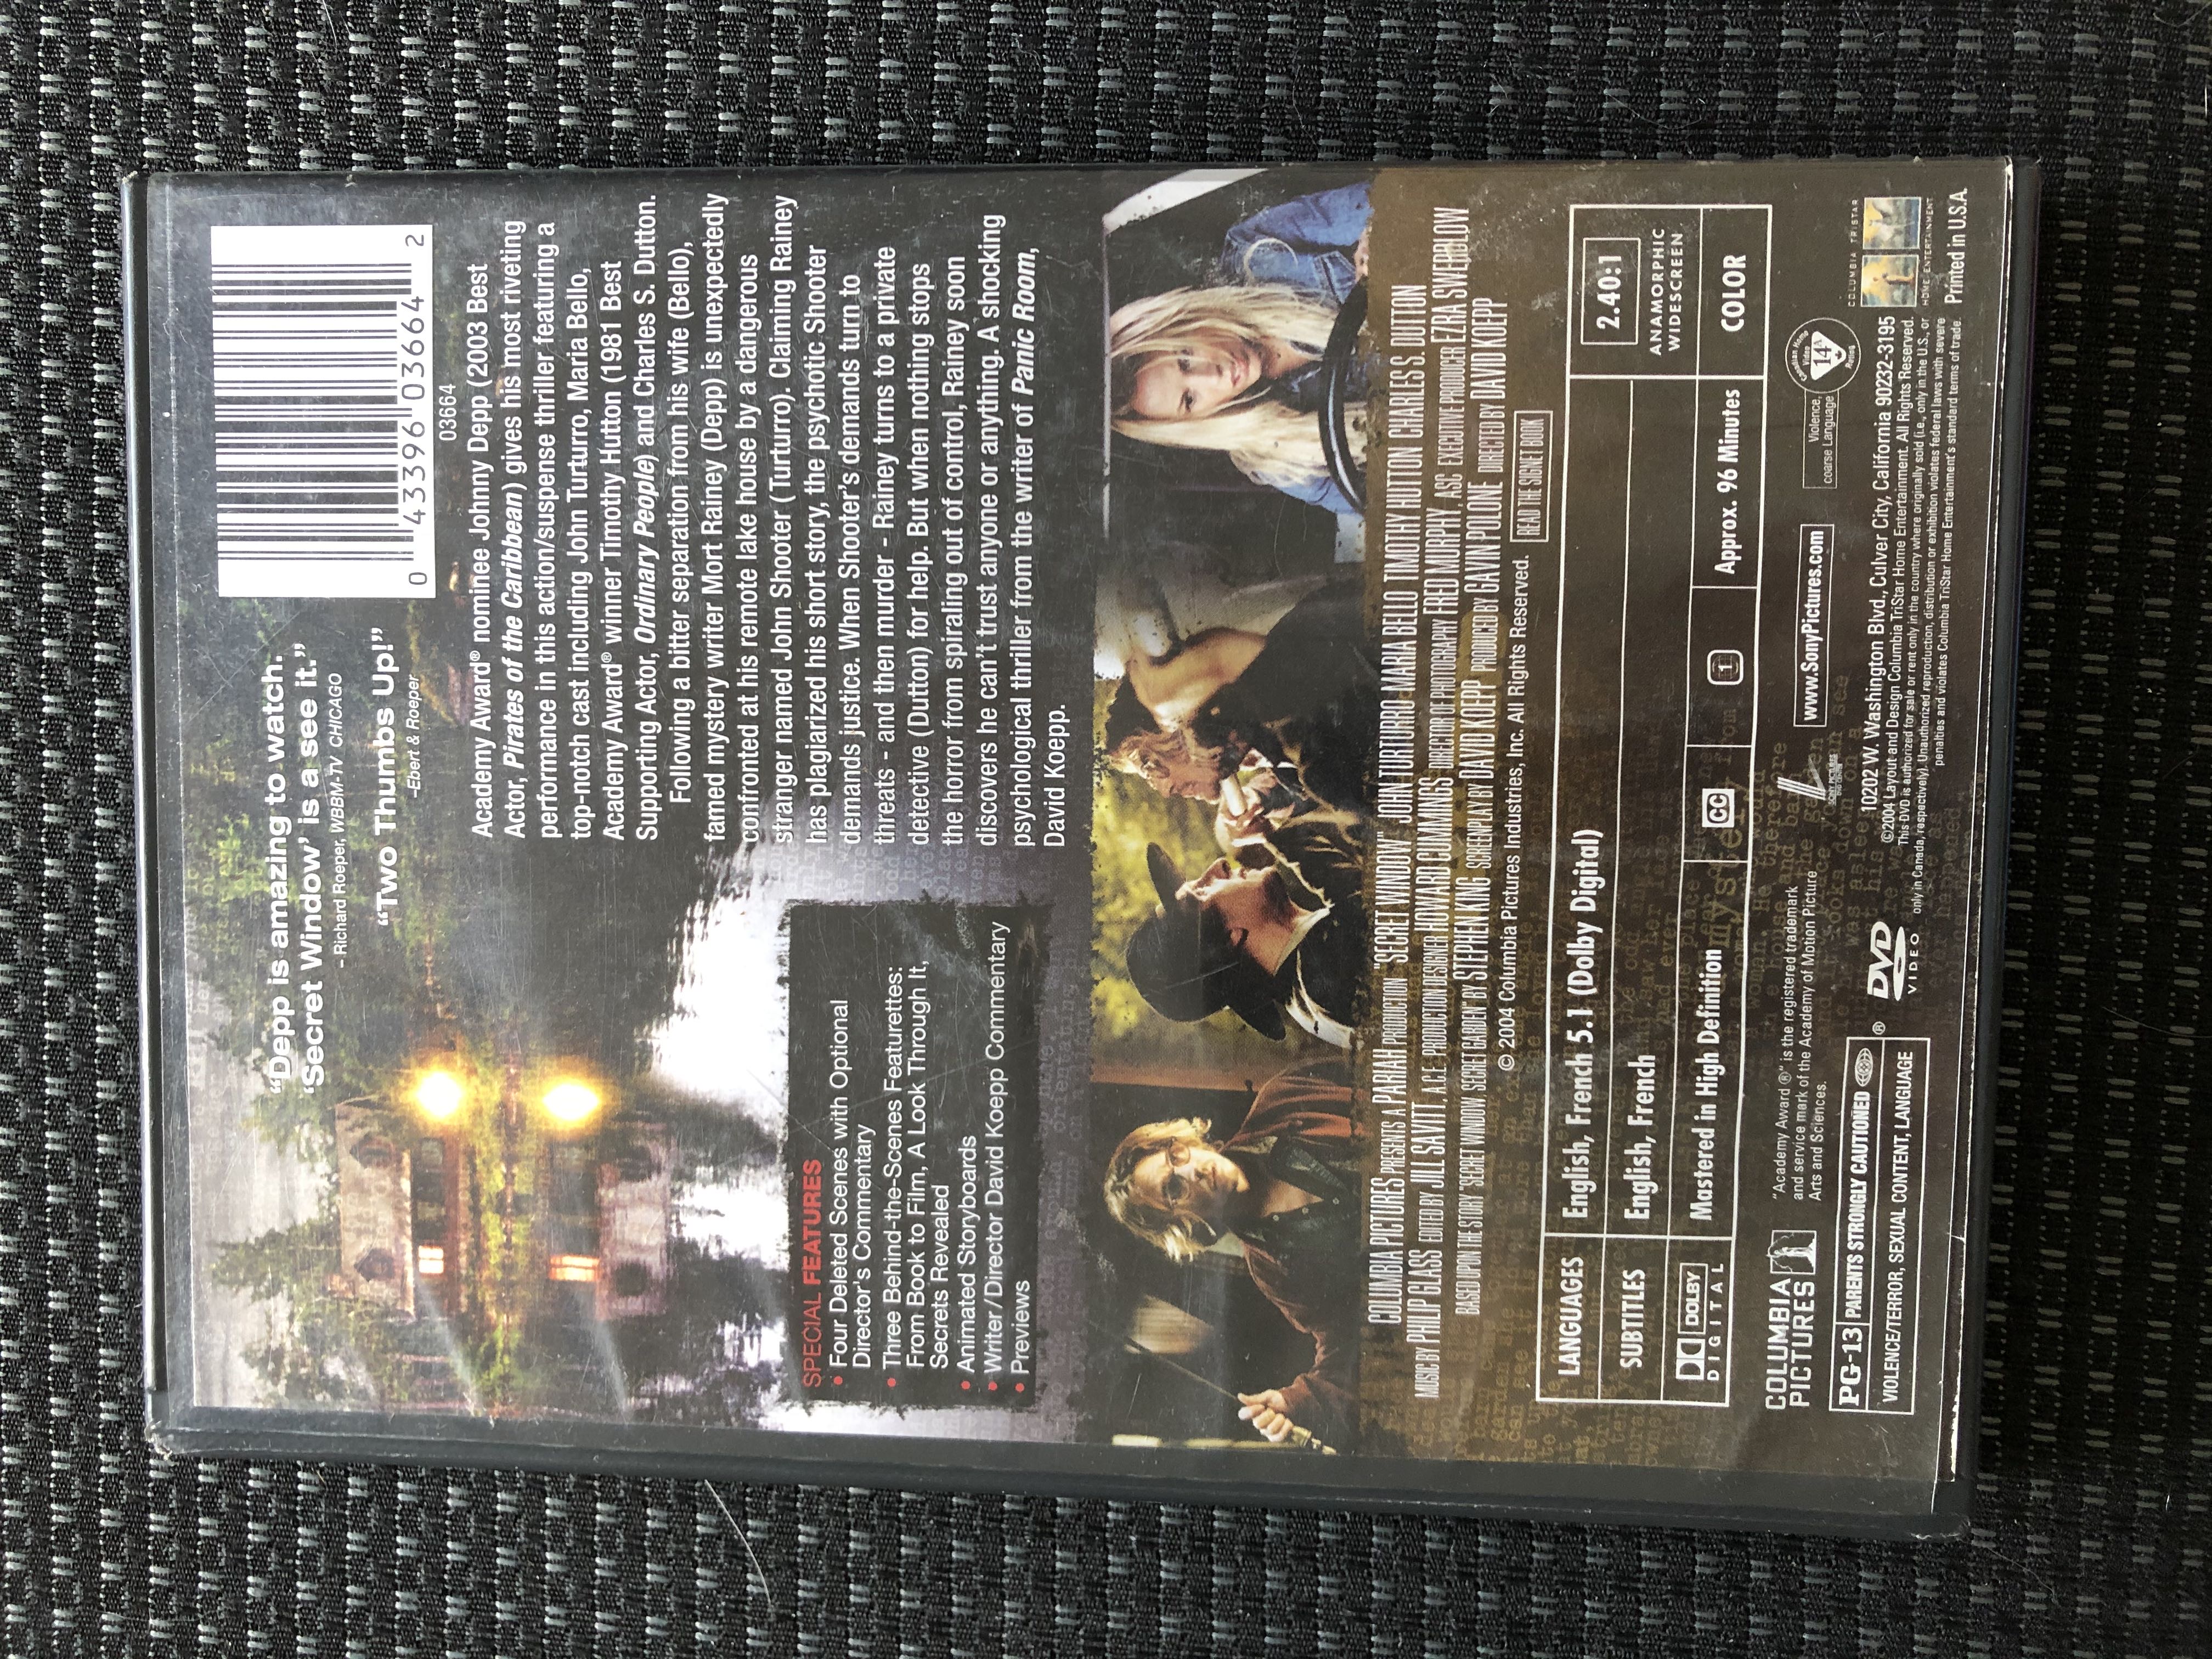 Secret Window DVD movie collectible [Barcode 043396036642] - Main Image 3